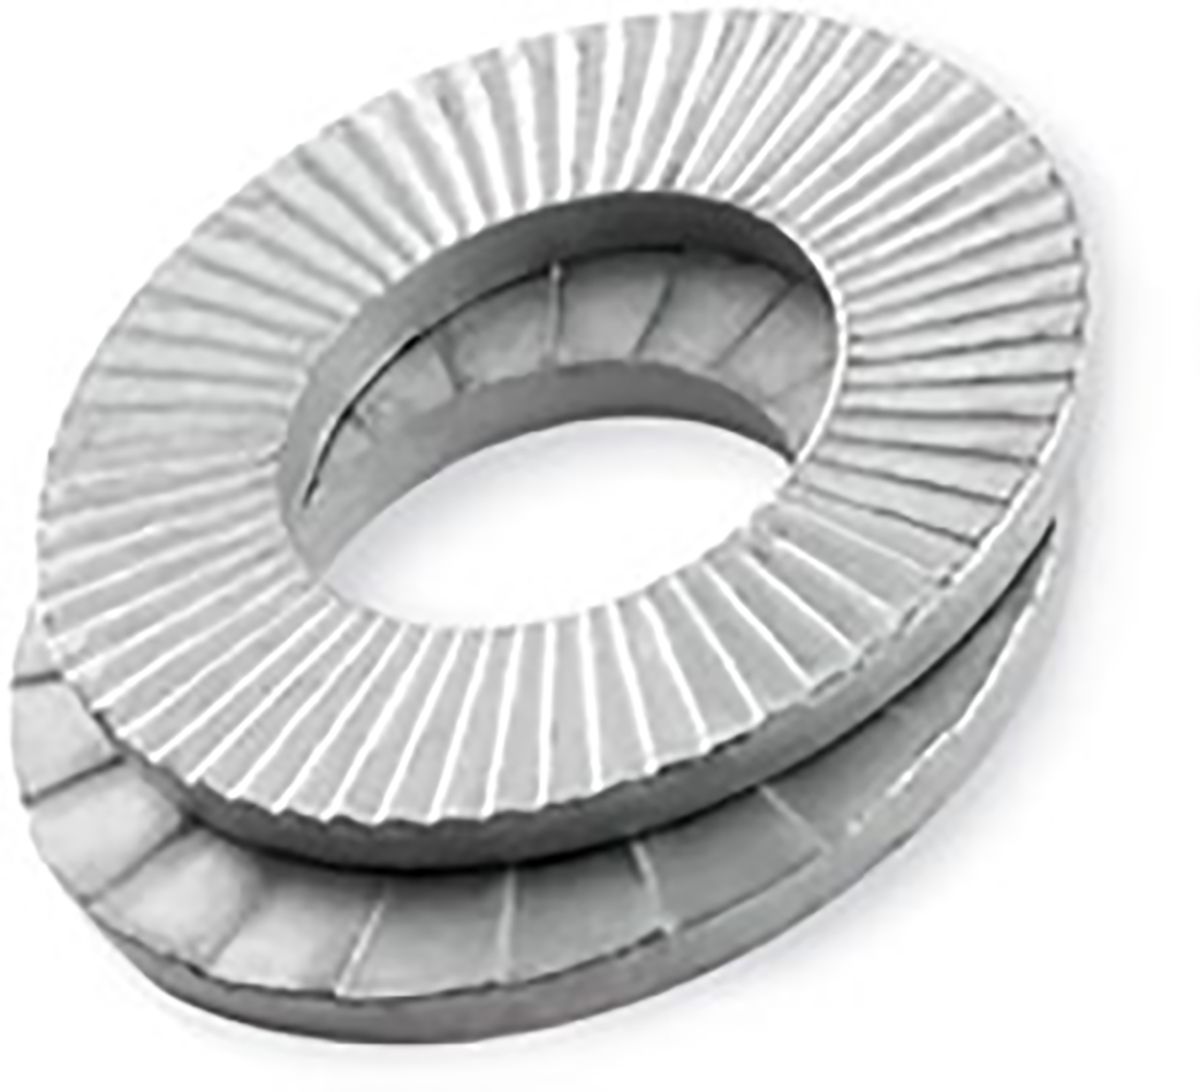 Zinc Carbon Steel Wedge Lock Locking & Anti-Vibration Washer, M16